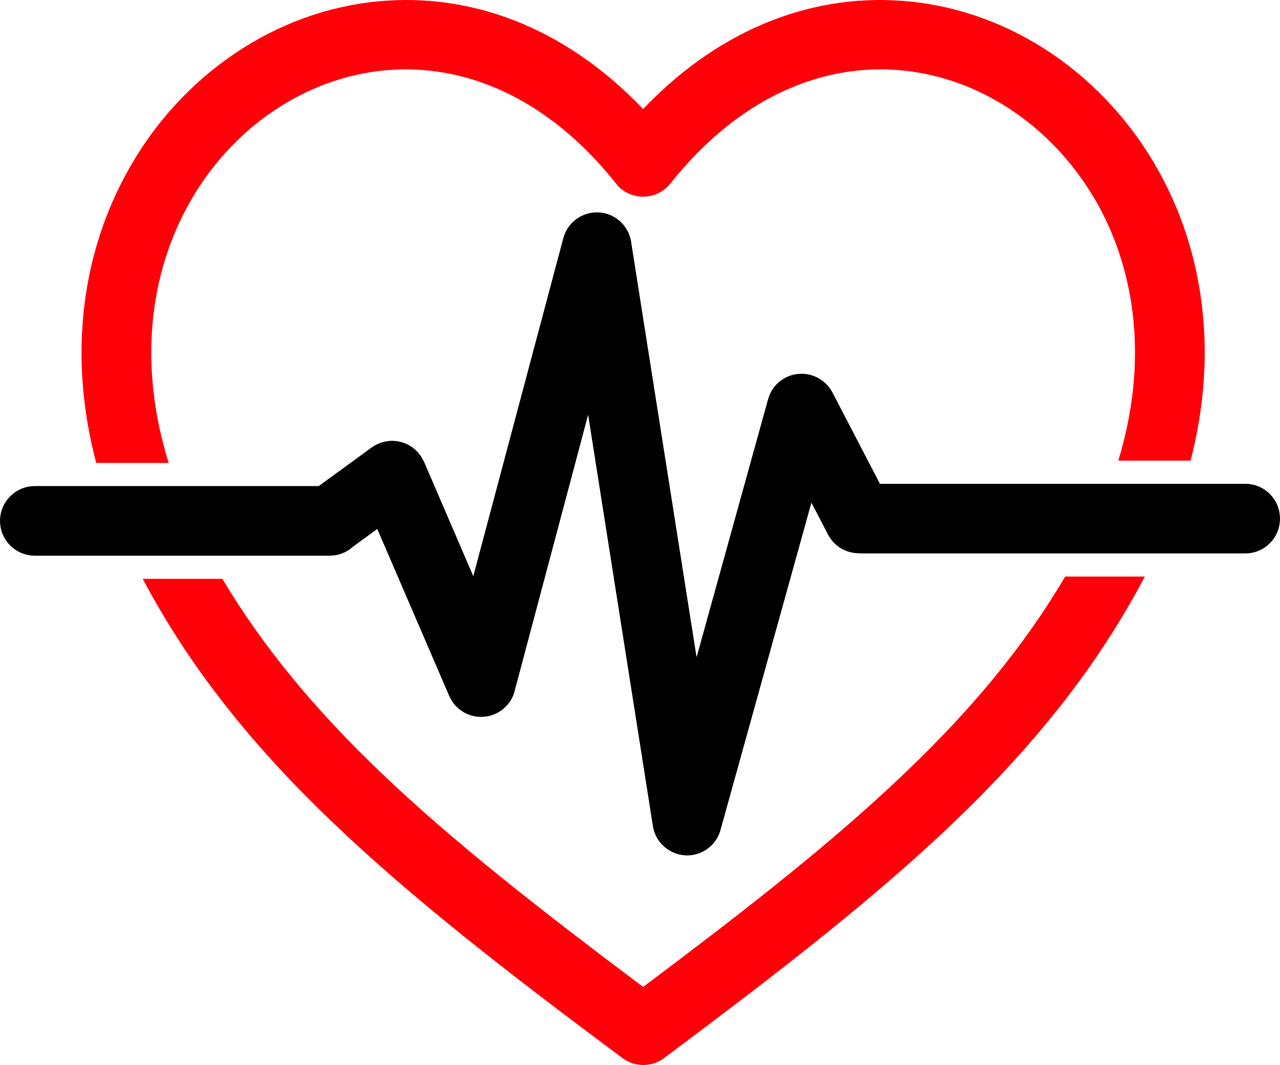 Heart shaped icon with heartbeat line symbolizing cardiac care